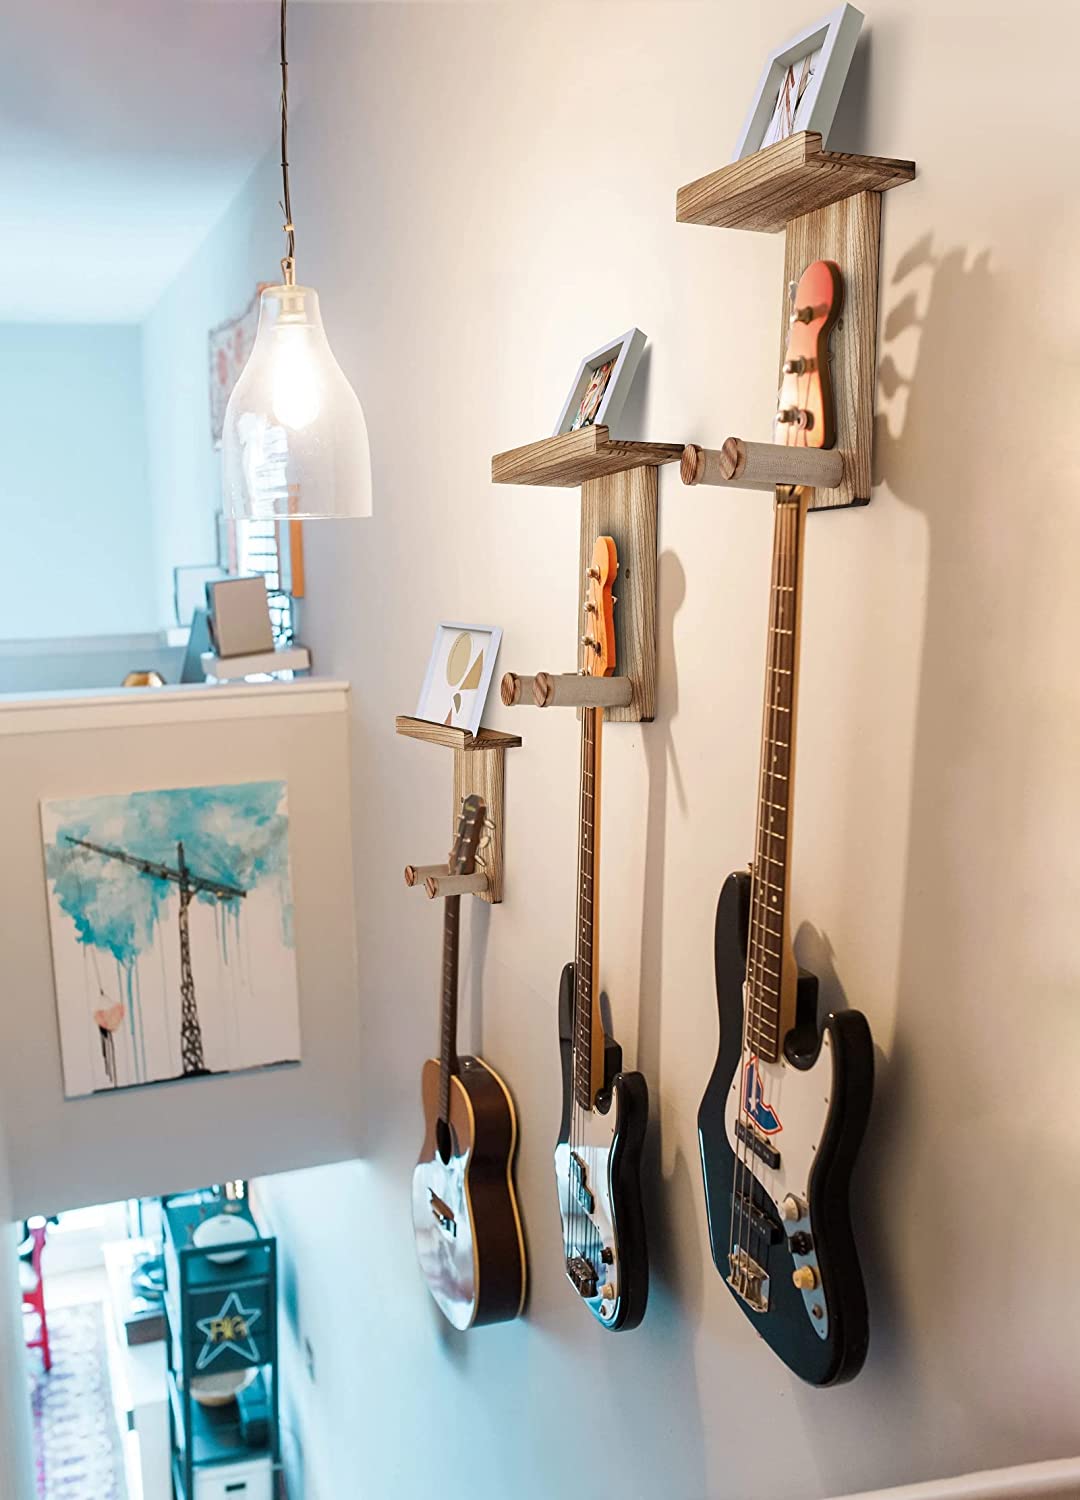 Wood Guitar Wall Mount Hanger